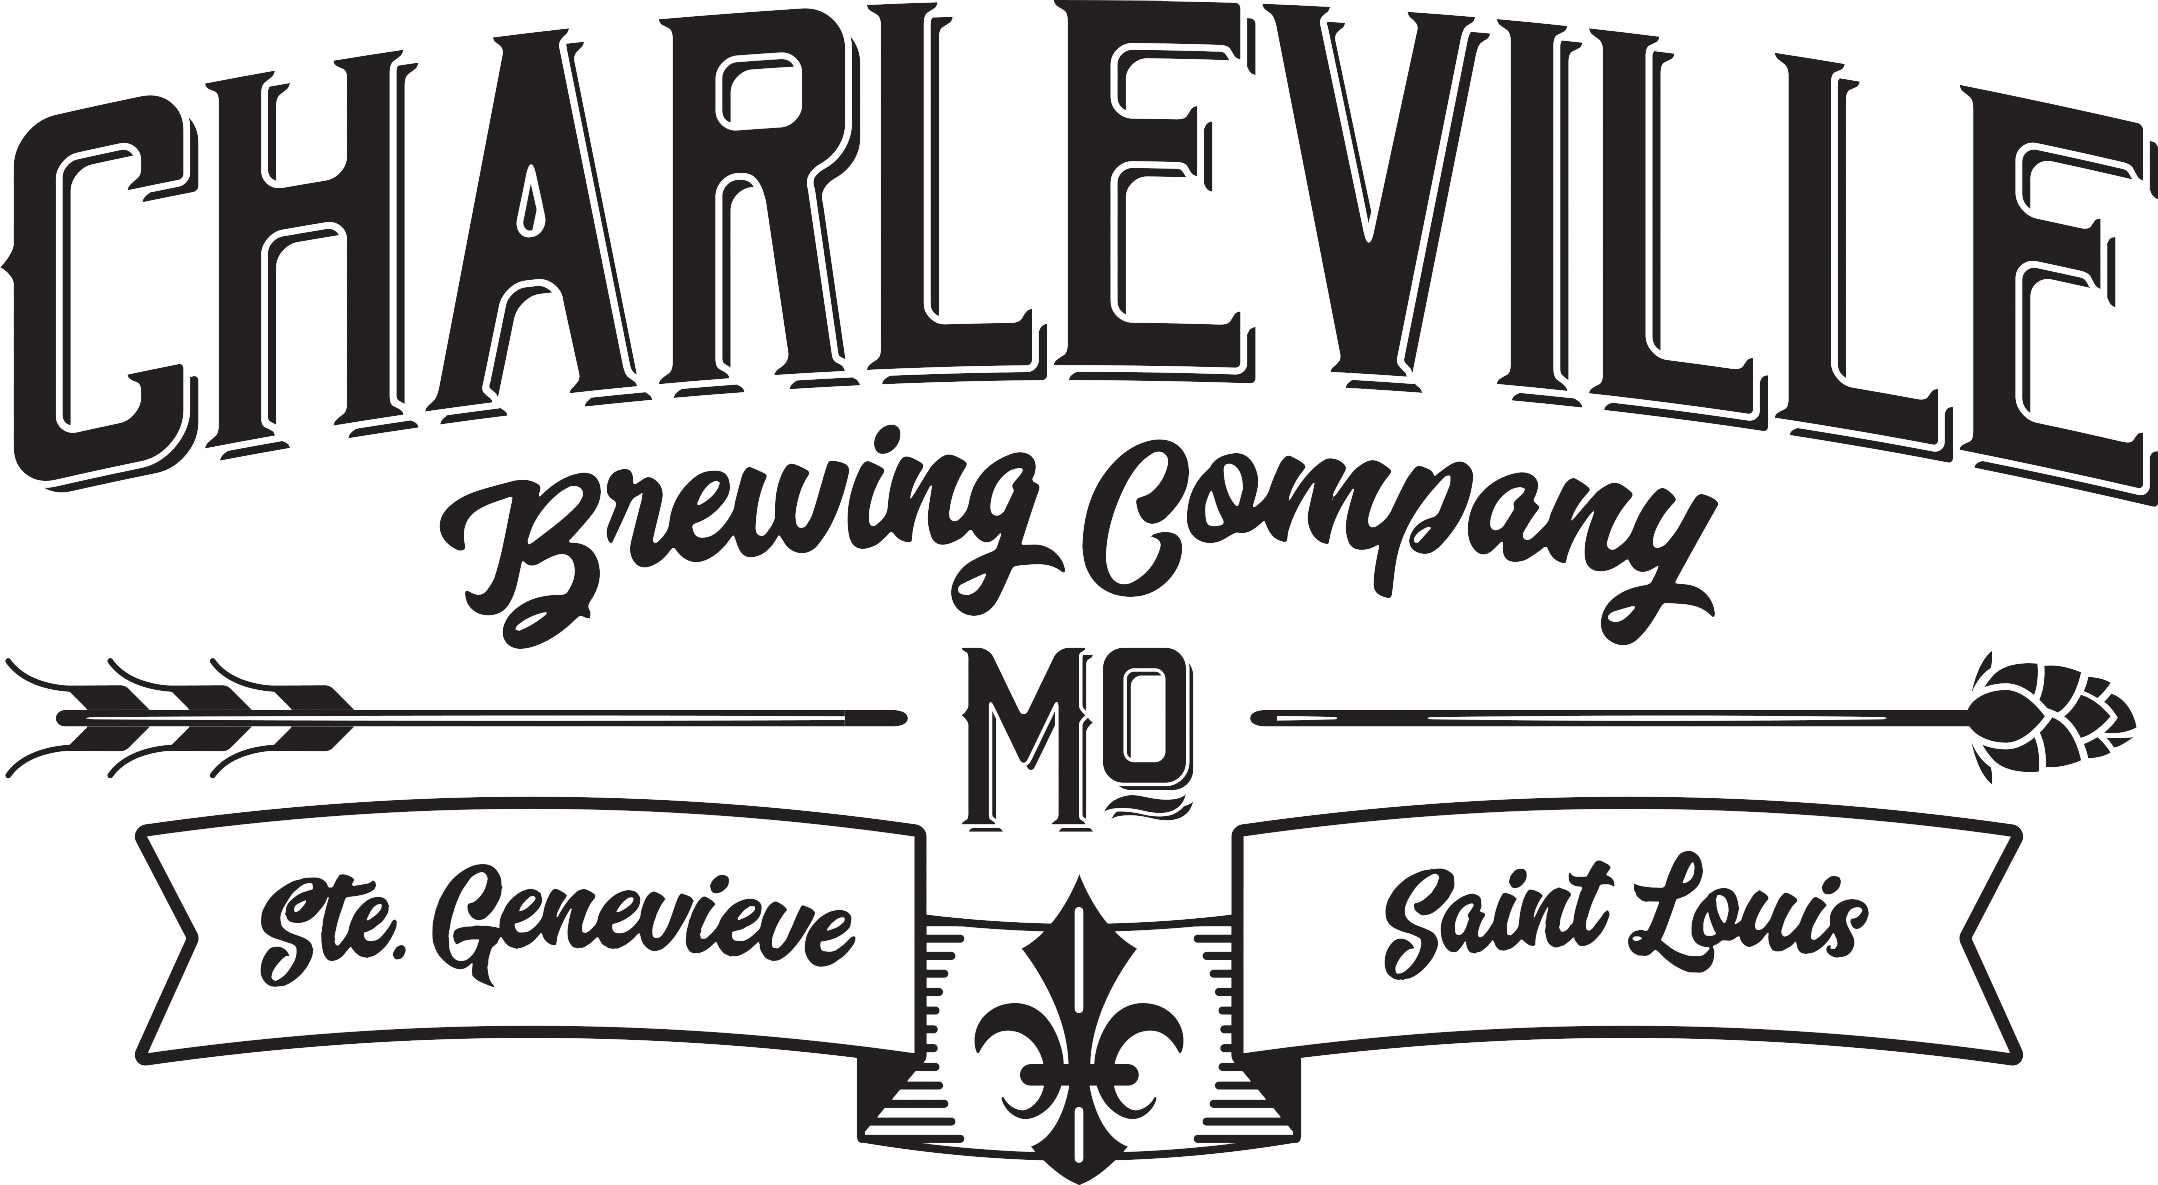 Charleville Brewing Company & Tavern